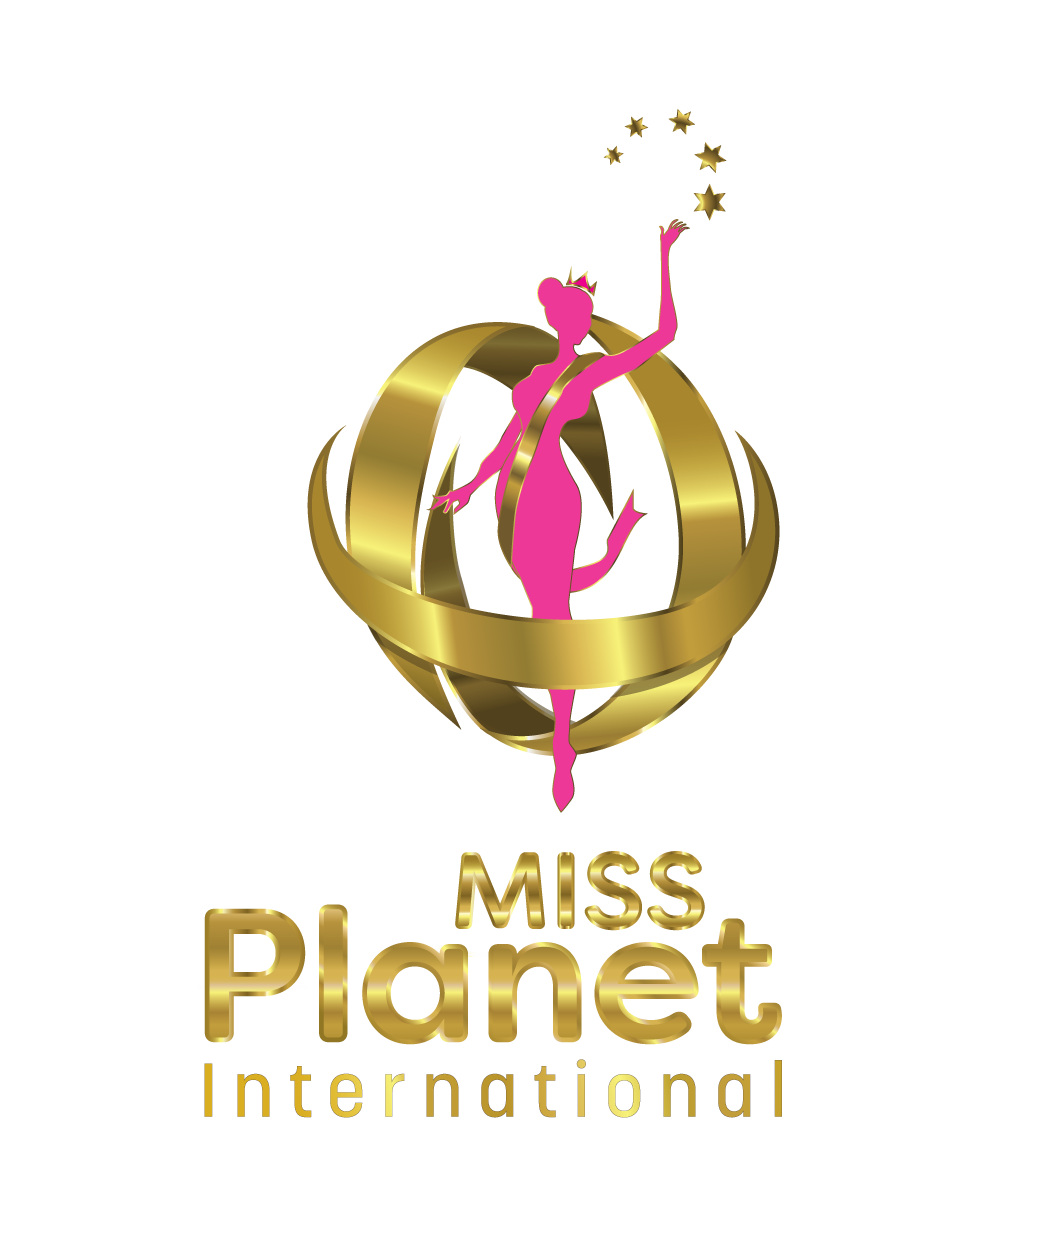 Miss Planet International - Beauty Pageant - International Pageant - Crown - Pageant - Miss Planet - Miss Universe - Miss America - MissUSA - Miss International - Pageantry - Pageant Queen - Pageant Planet - Pageant News - Pageant World - Pageant World - Pageant Crown